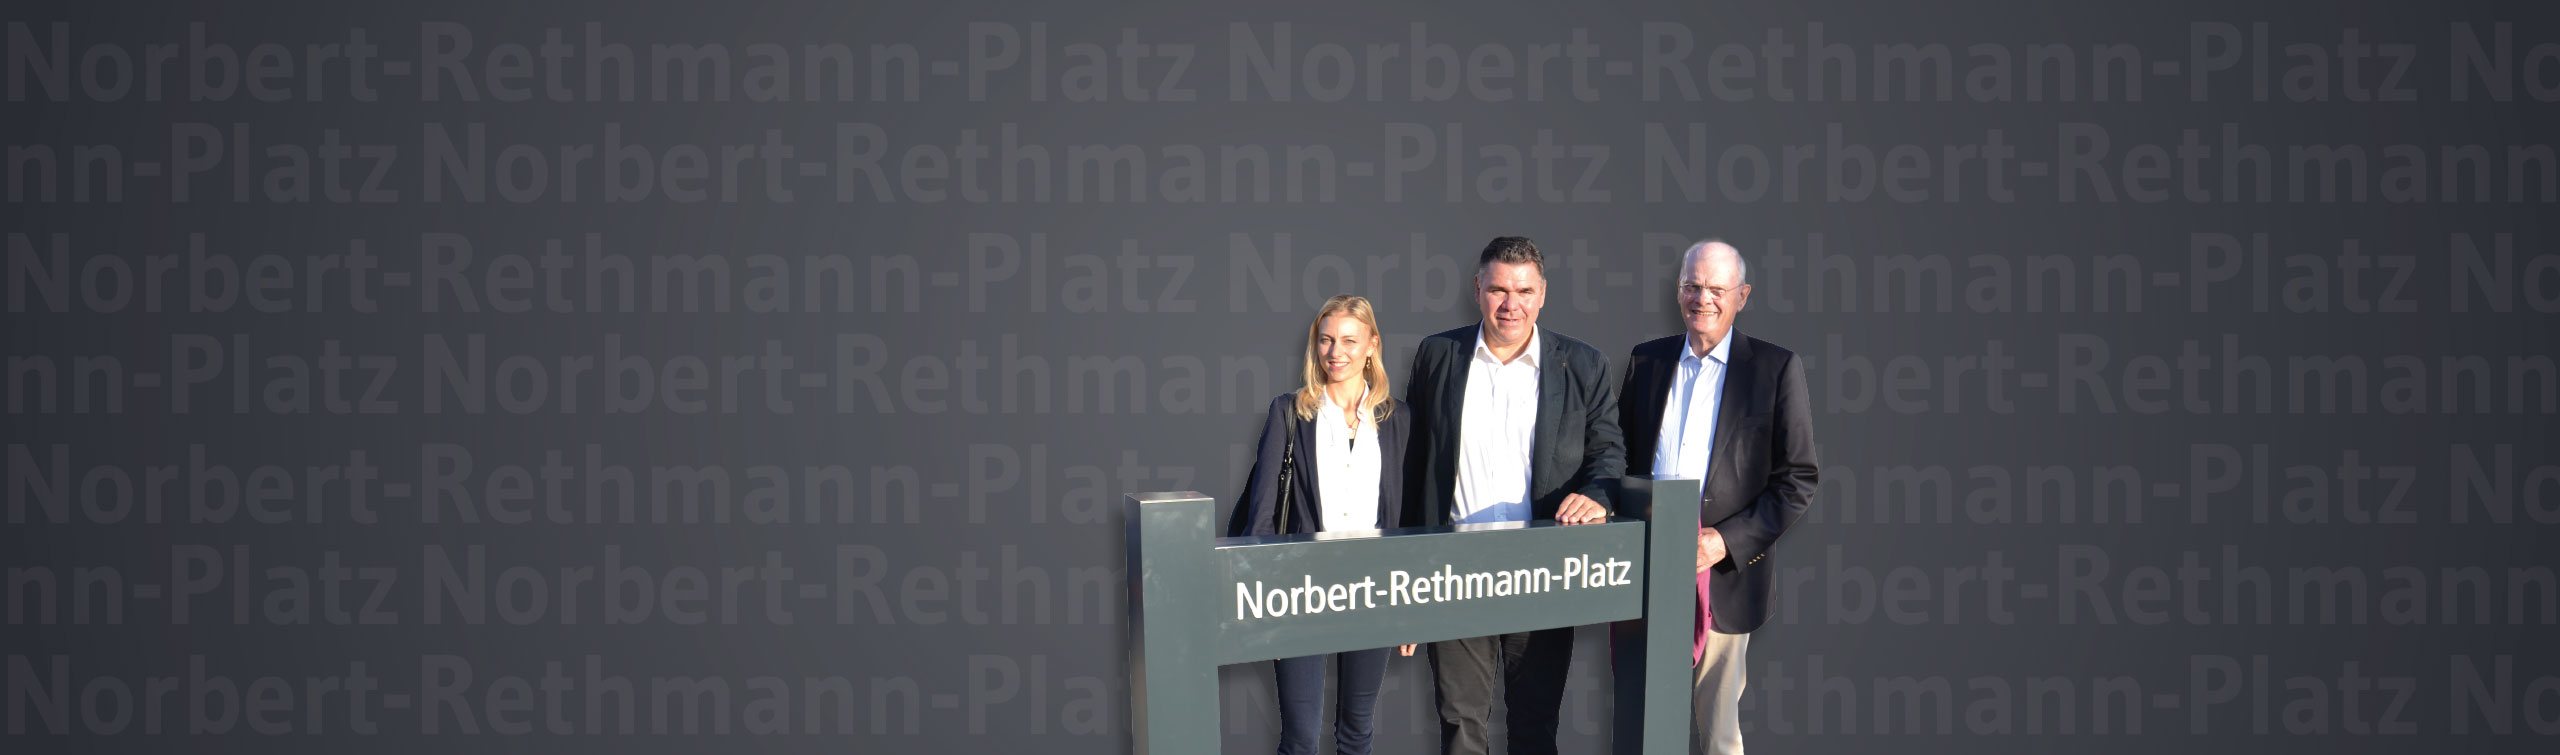 Norbert-Rethmann-Platz in Selm offiziell eingeweiht